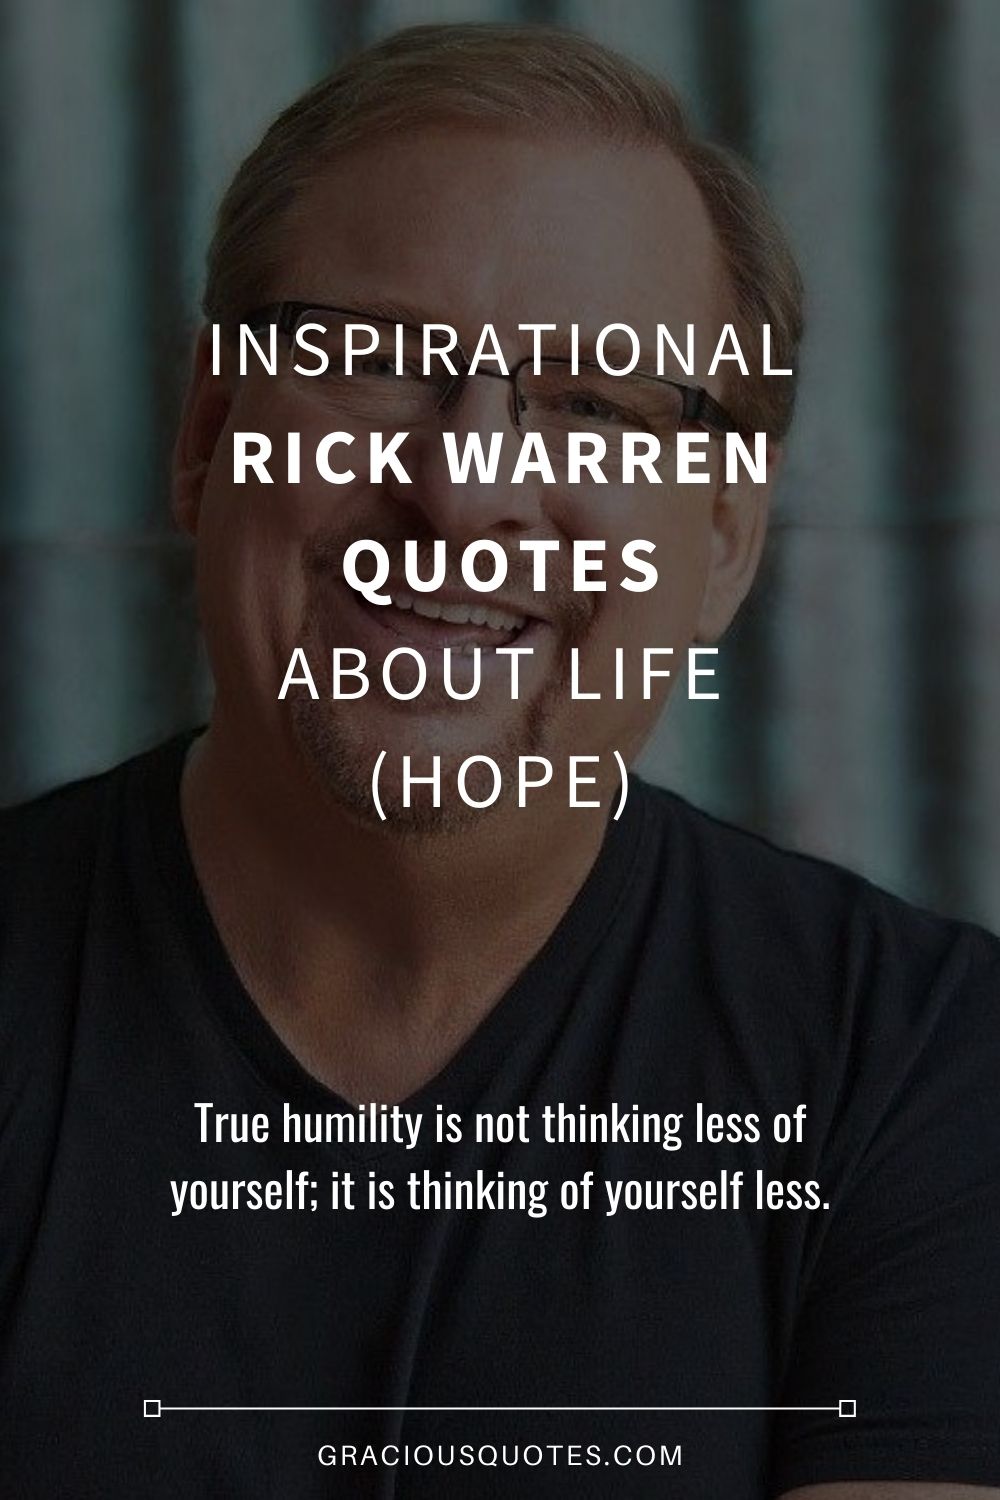 Inspirational Rick Warren Quotes About Life (HOPE) - Gracious Quotes